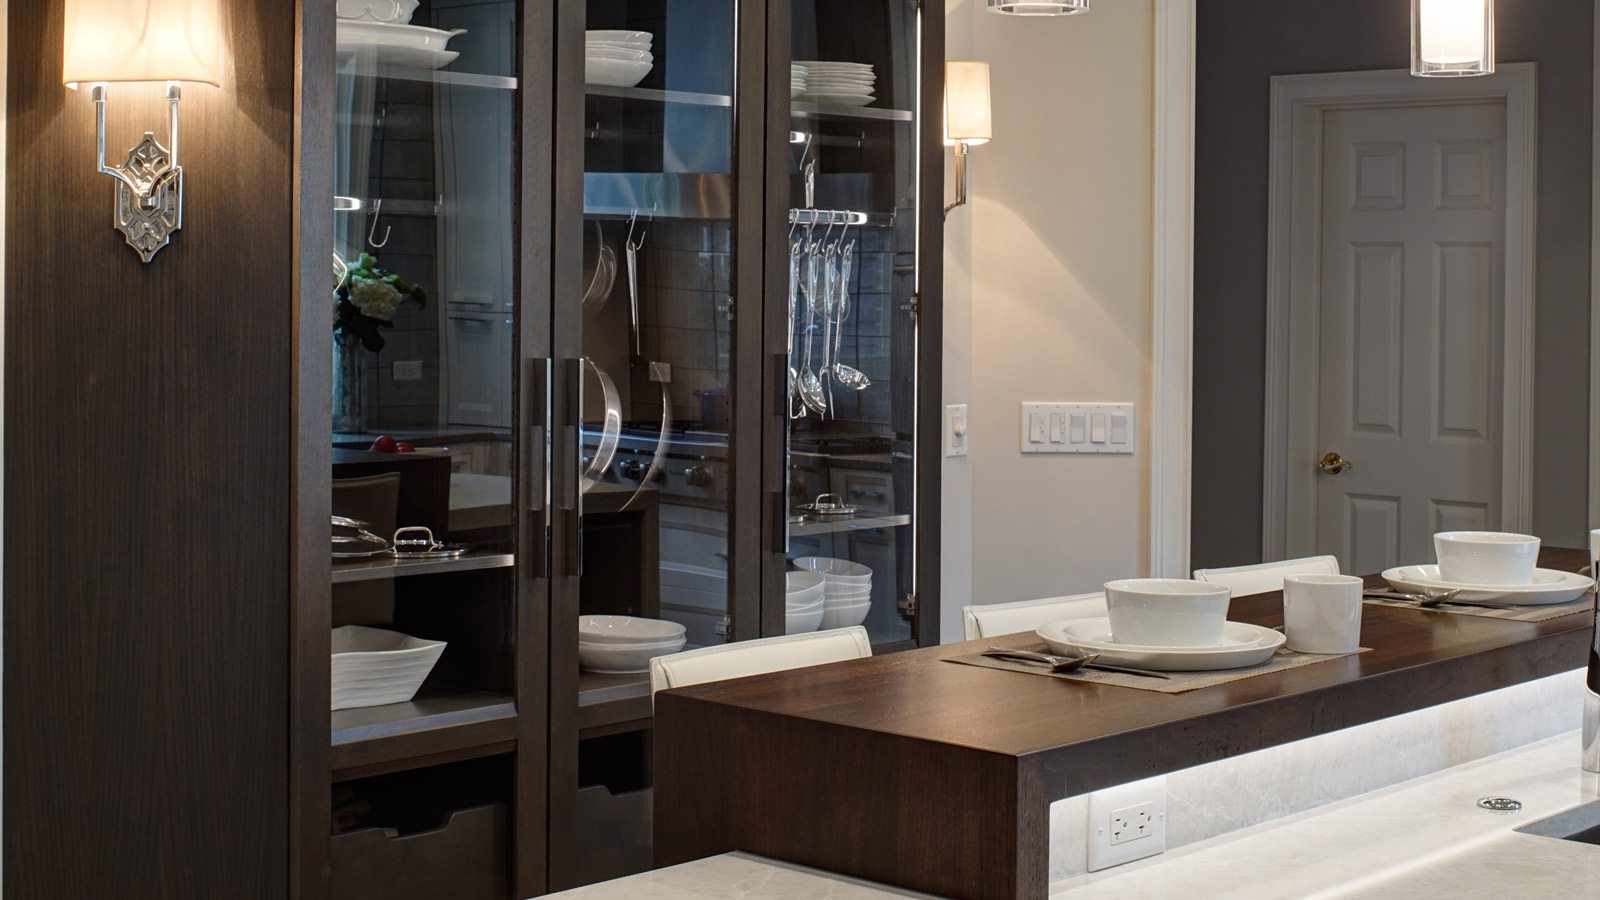 Glen Ellyn luxury kitchen design with black china cabinet